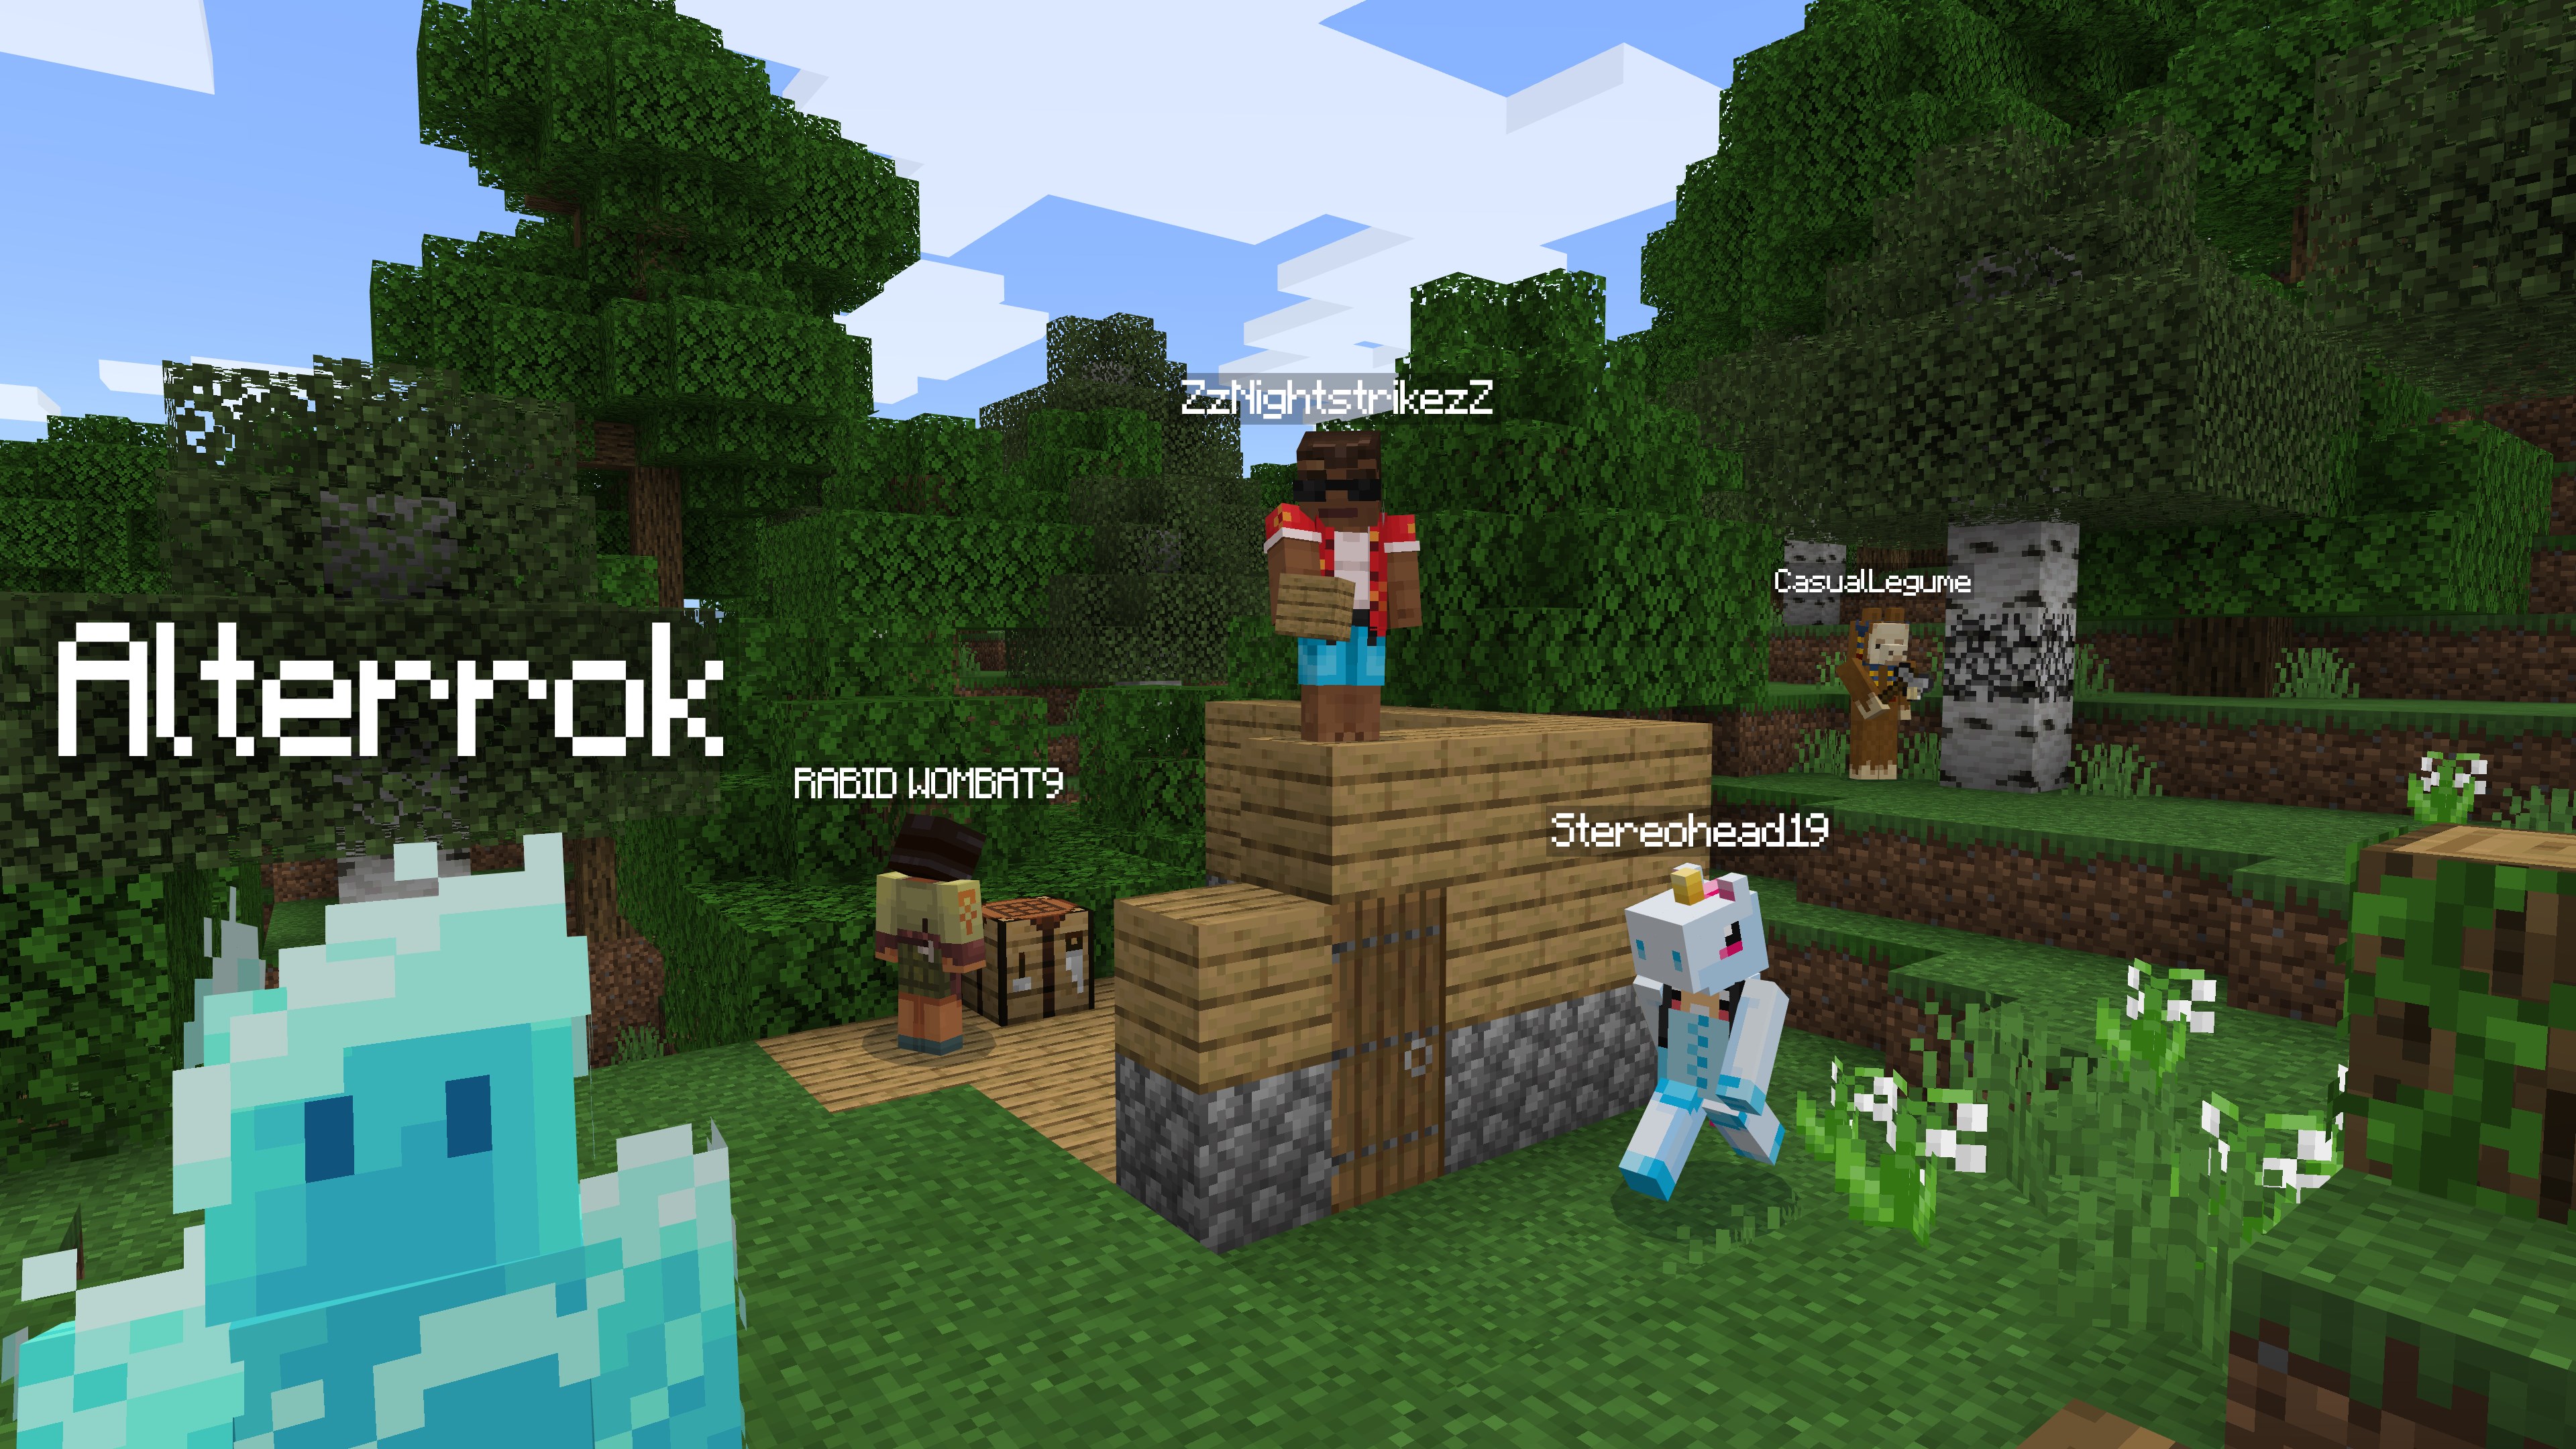 Minecraft: Java & Bedrock Edition For PC NG Windows 10 CD Key